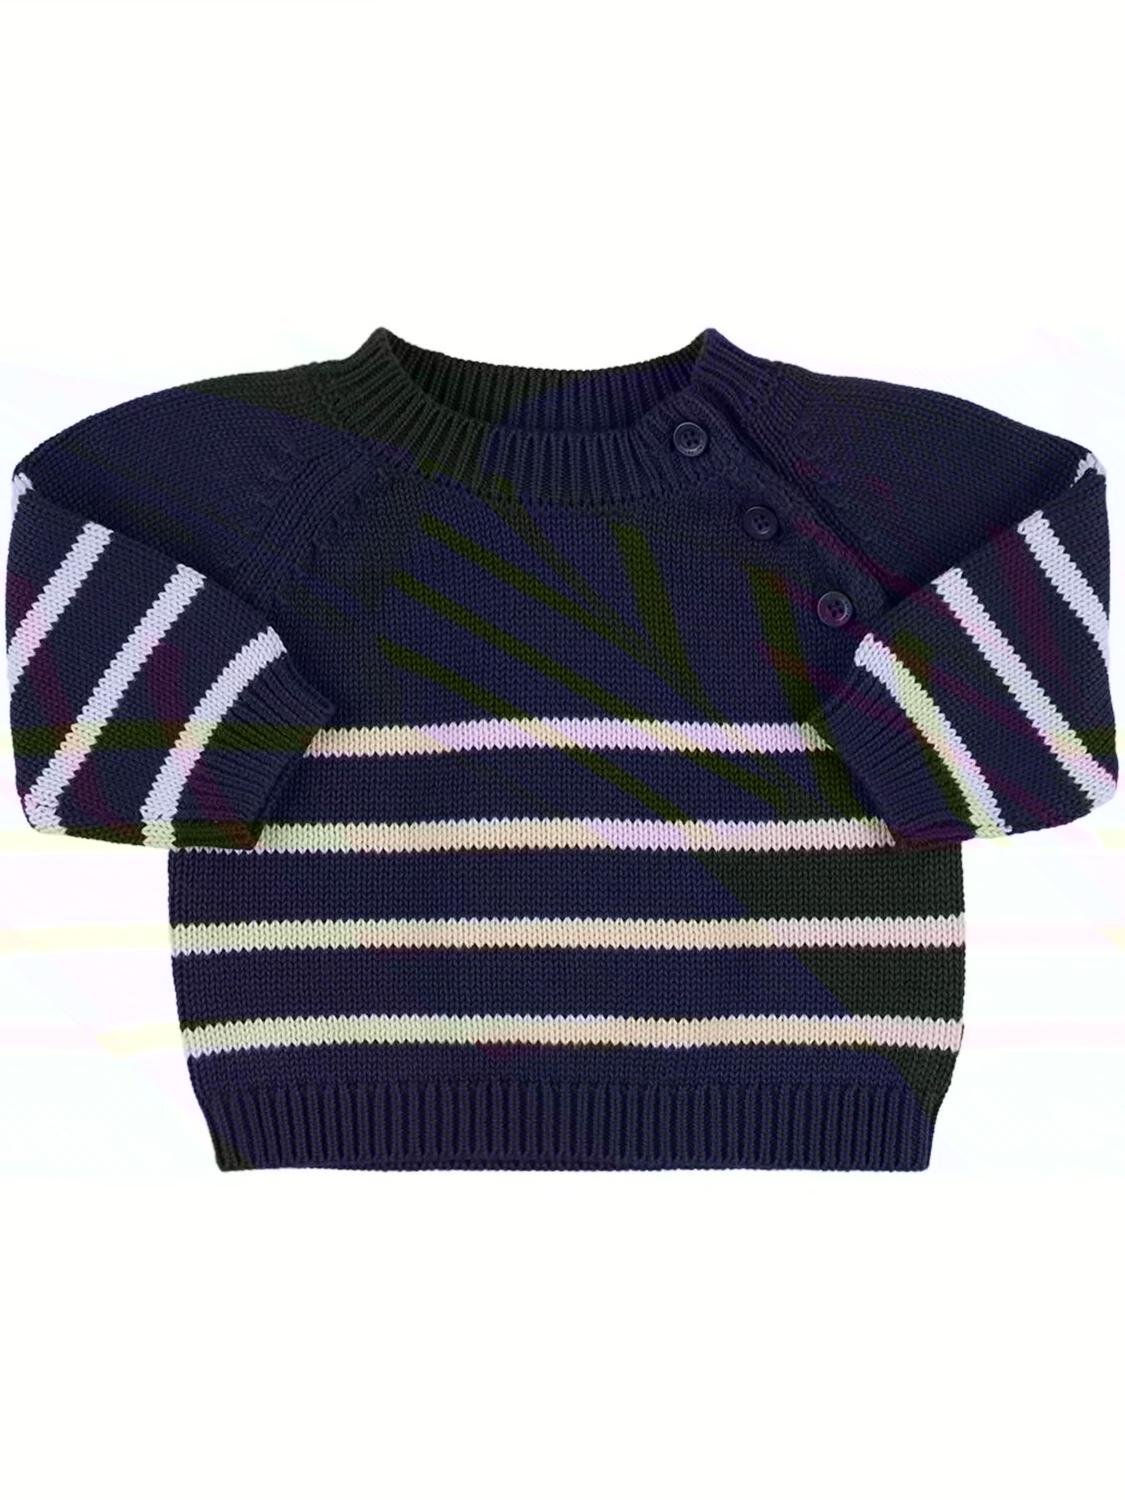 Cotton Knit Sweater by PETIT BATEAU